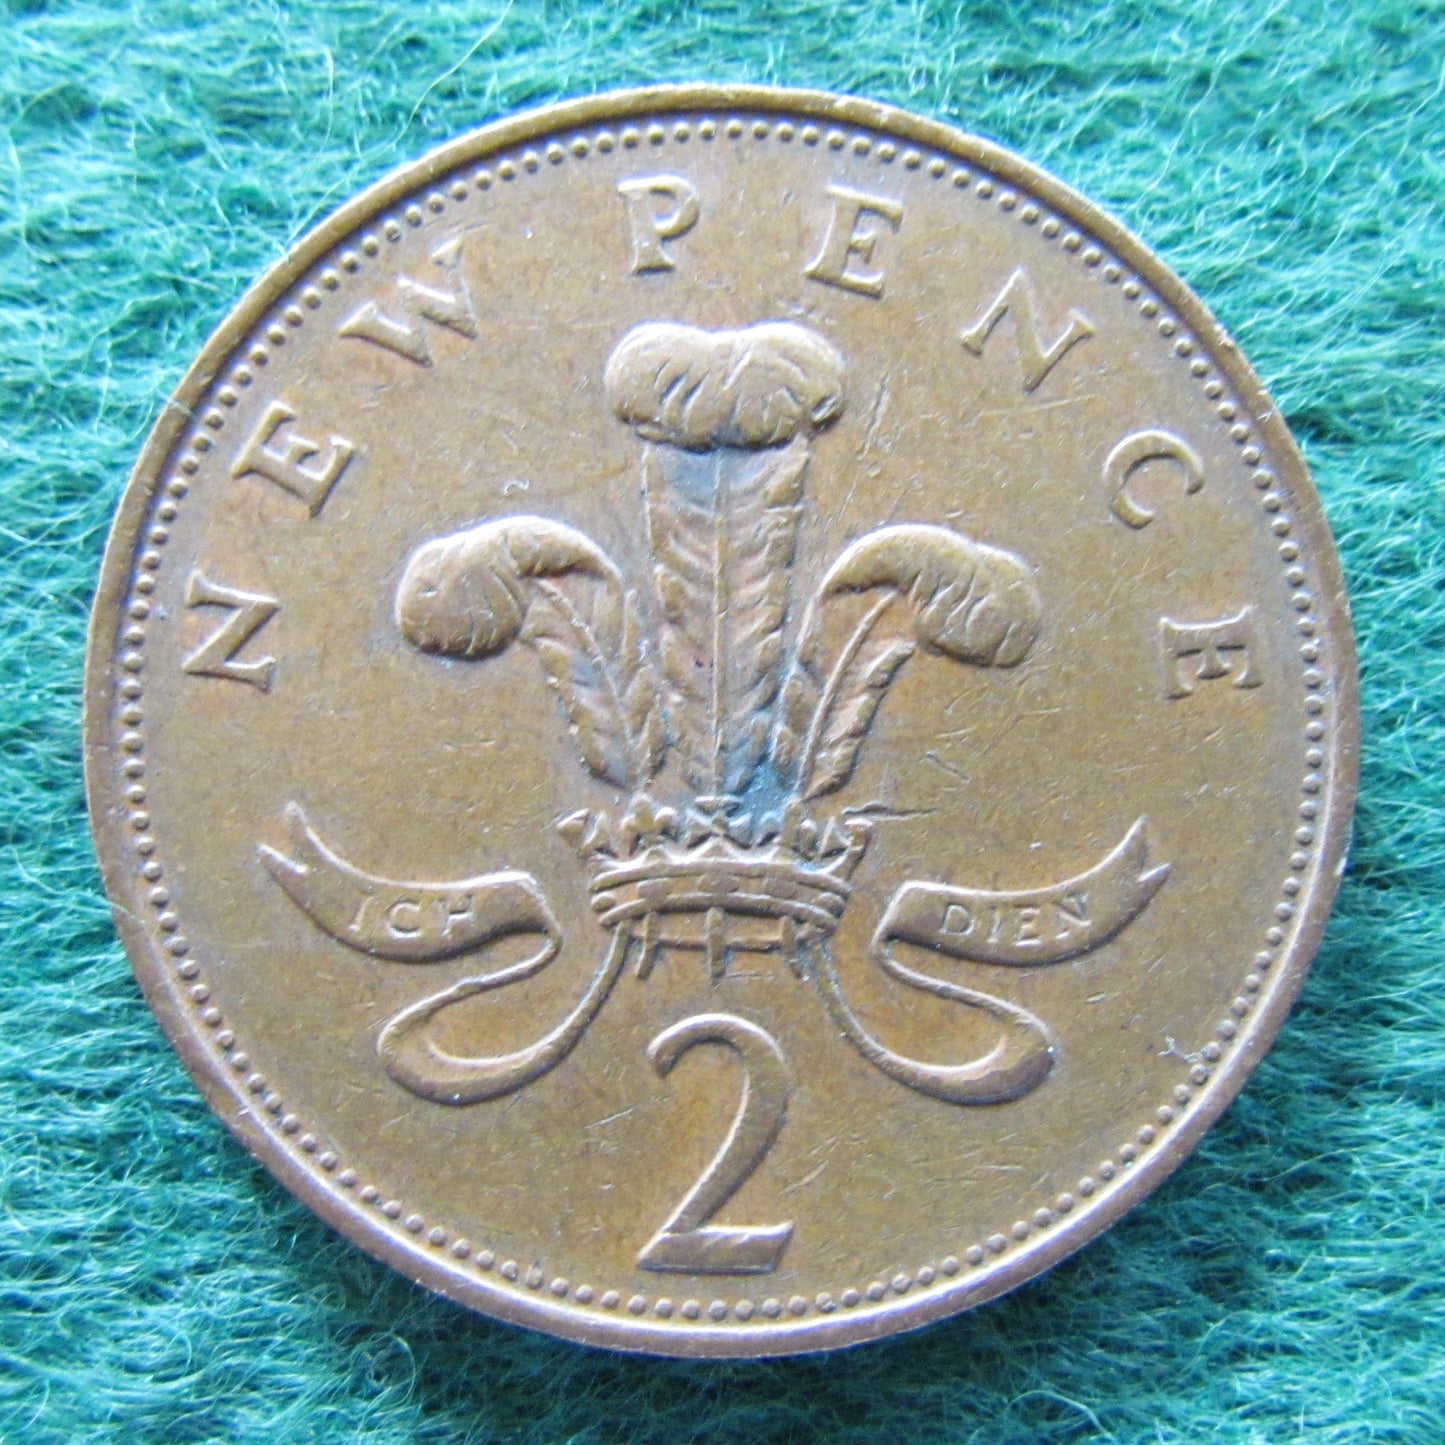 GB British UK English 1971 2 New Pence Queen Elizabeth II Coin